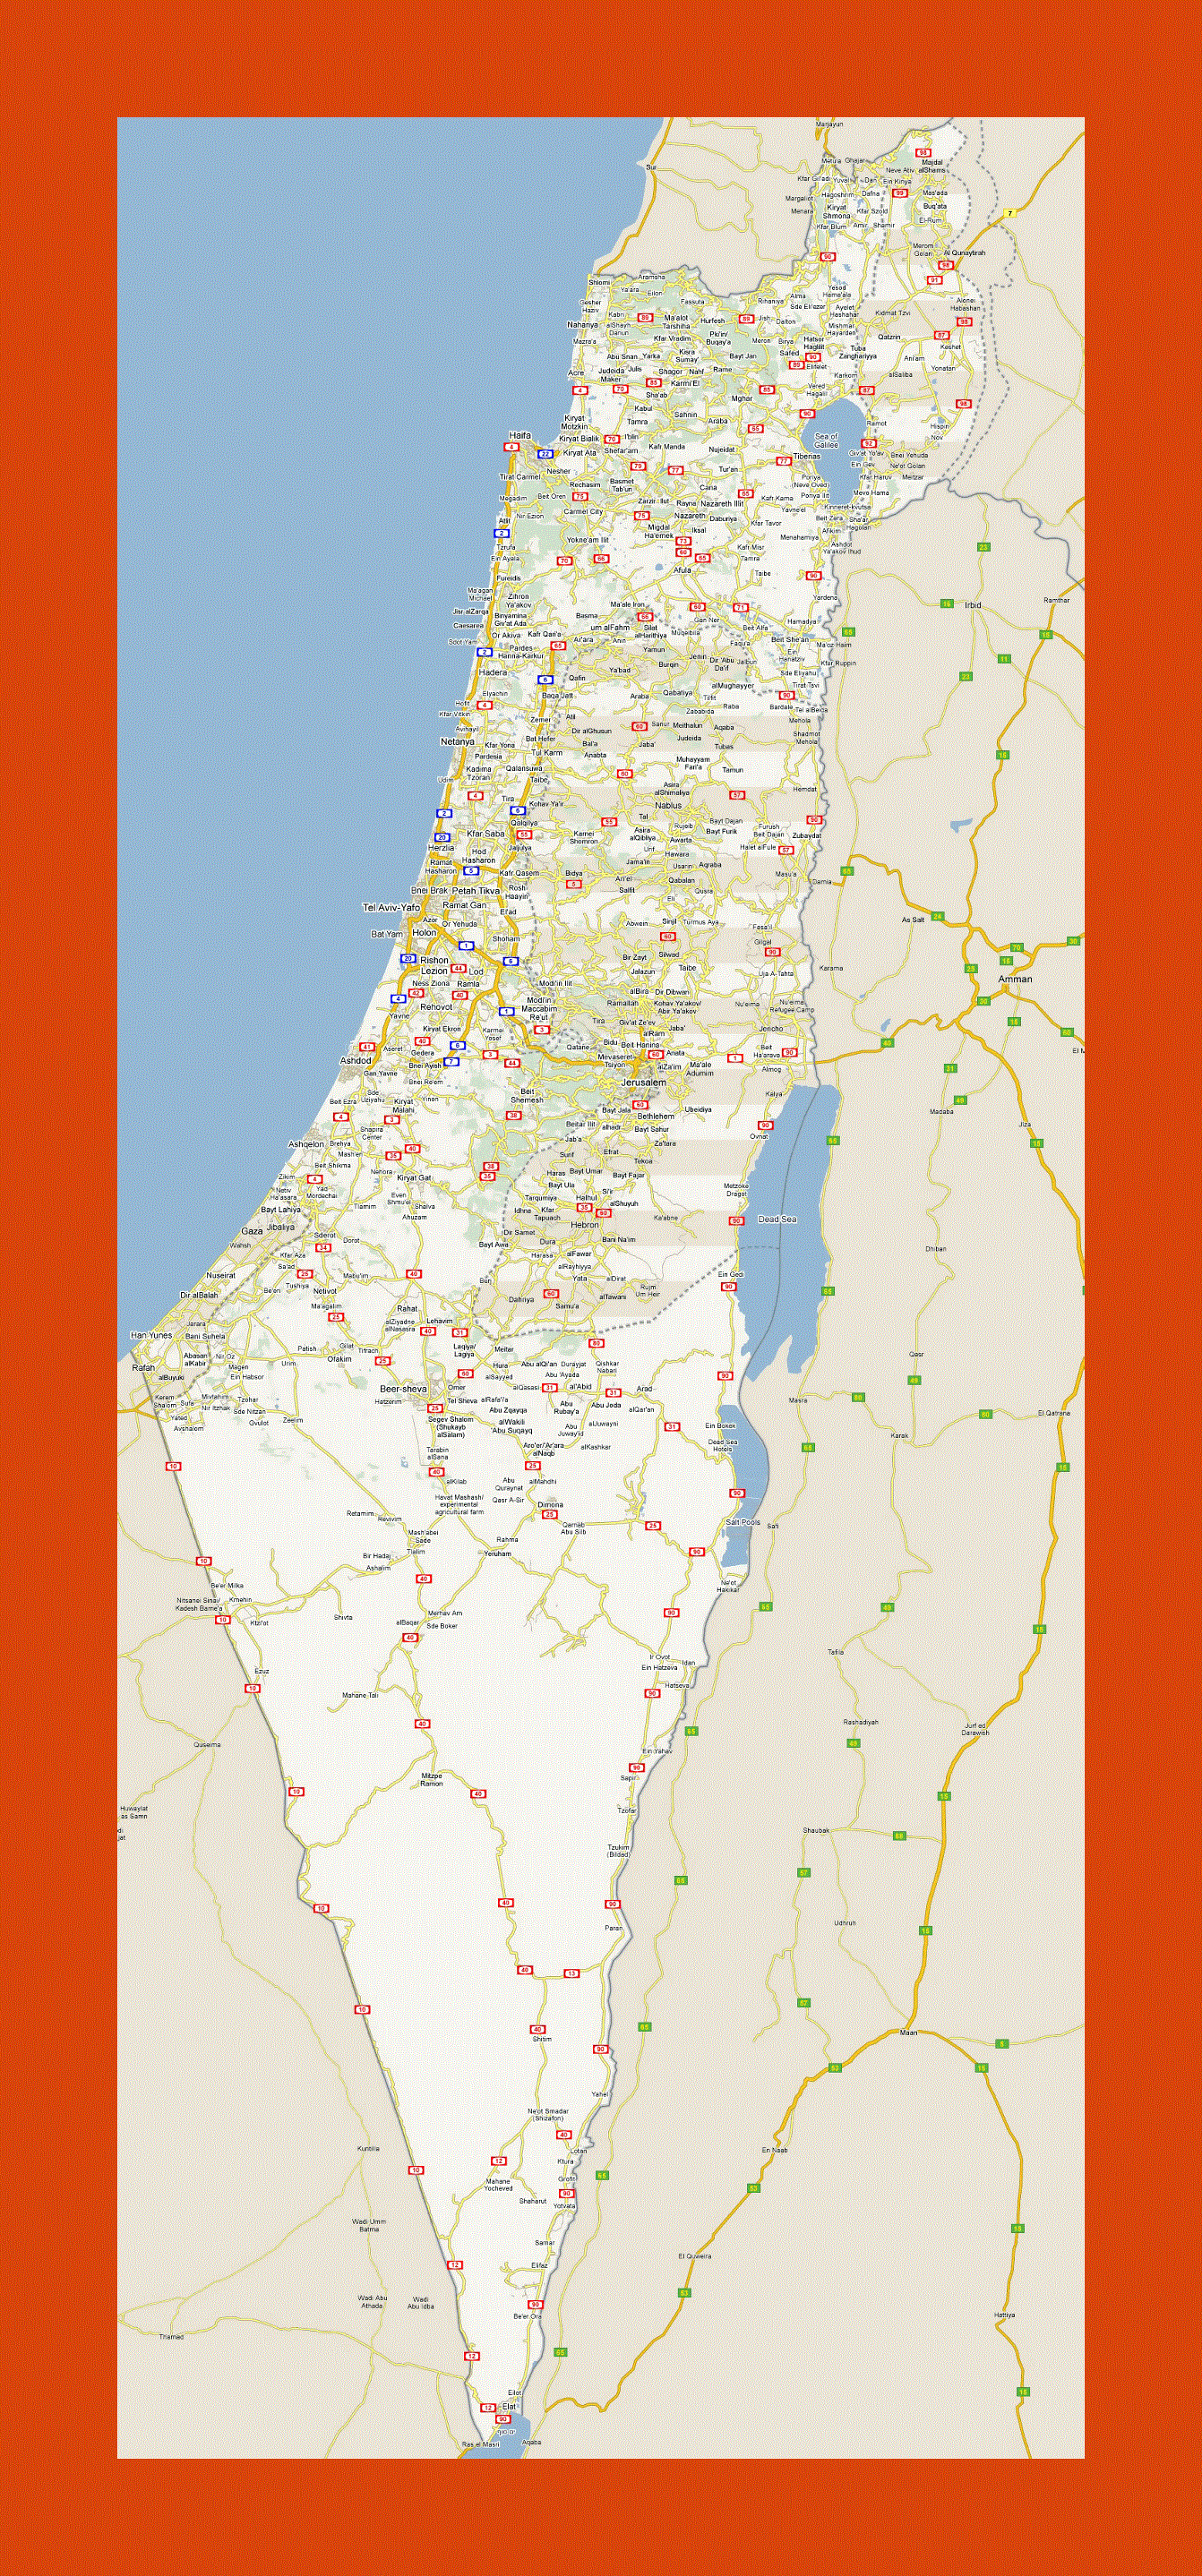 Road map of Israel